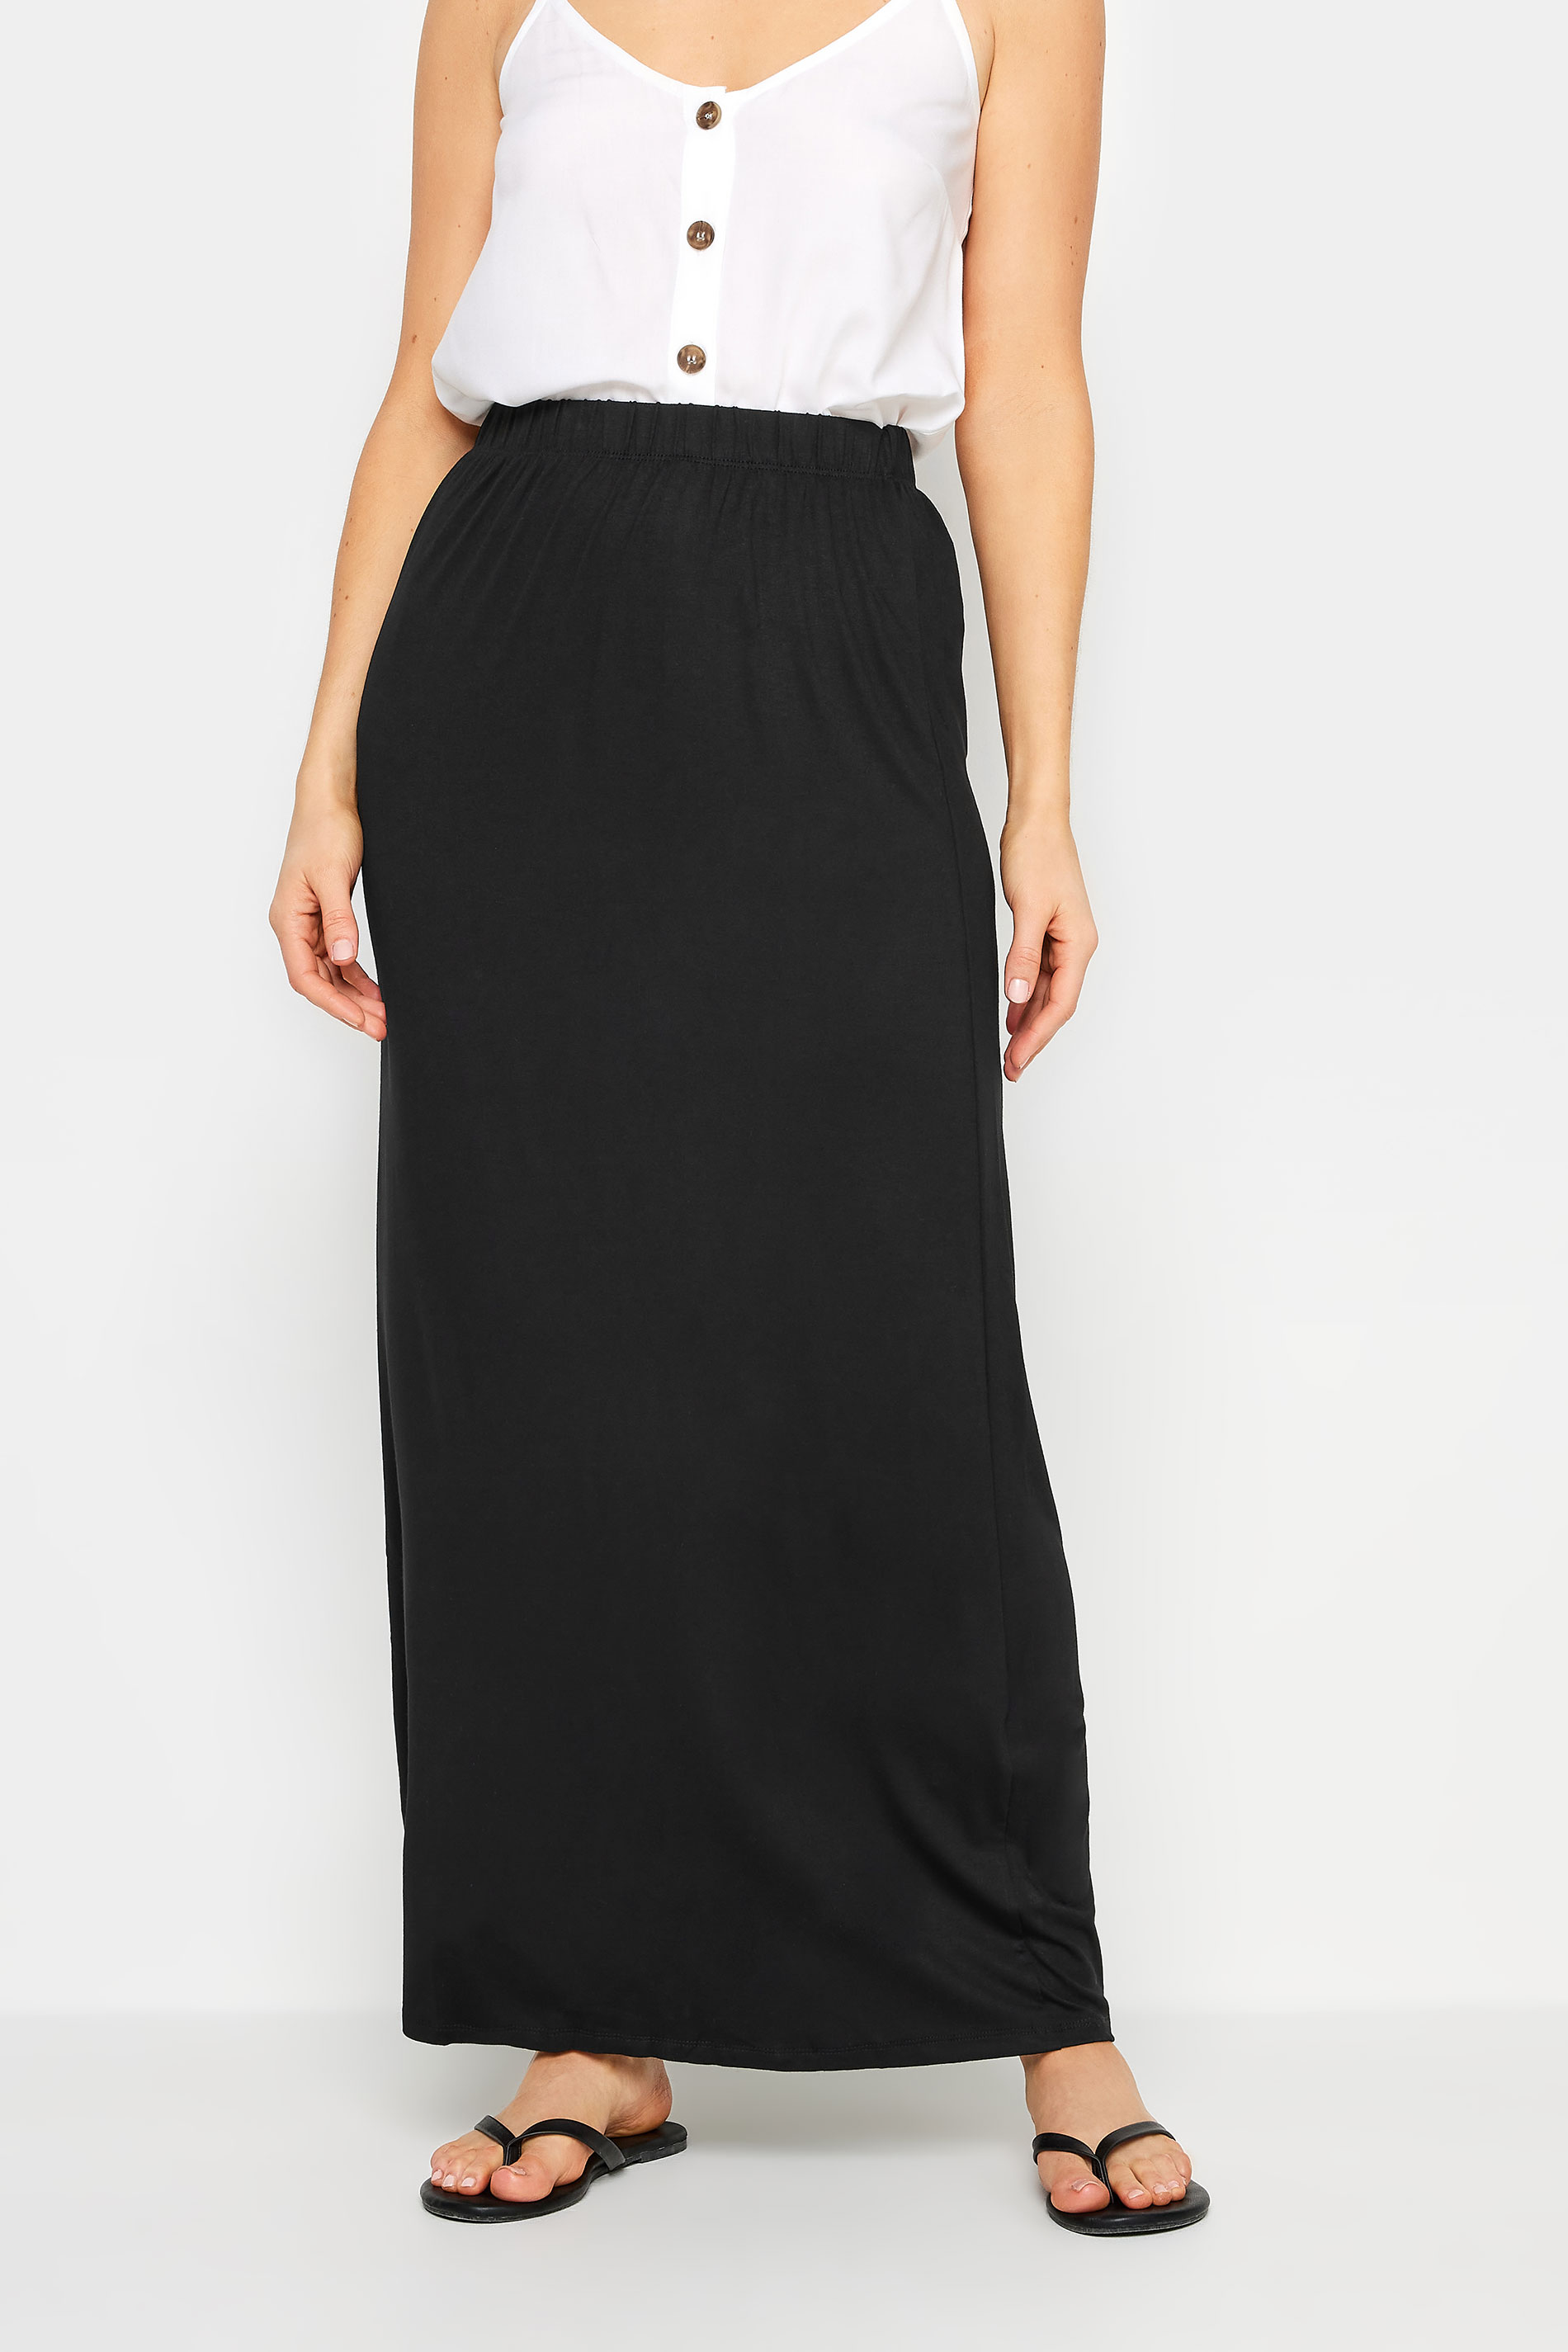 LTS Tall Women's Black Maxi Tube Skirt | Long Tall Sally 2